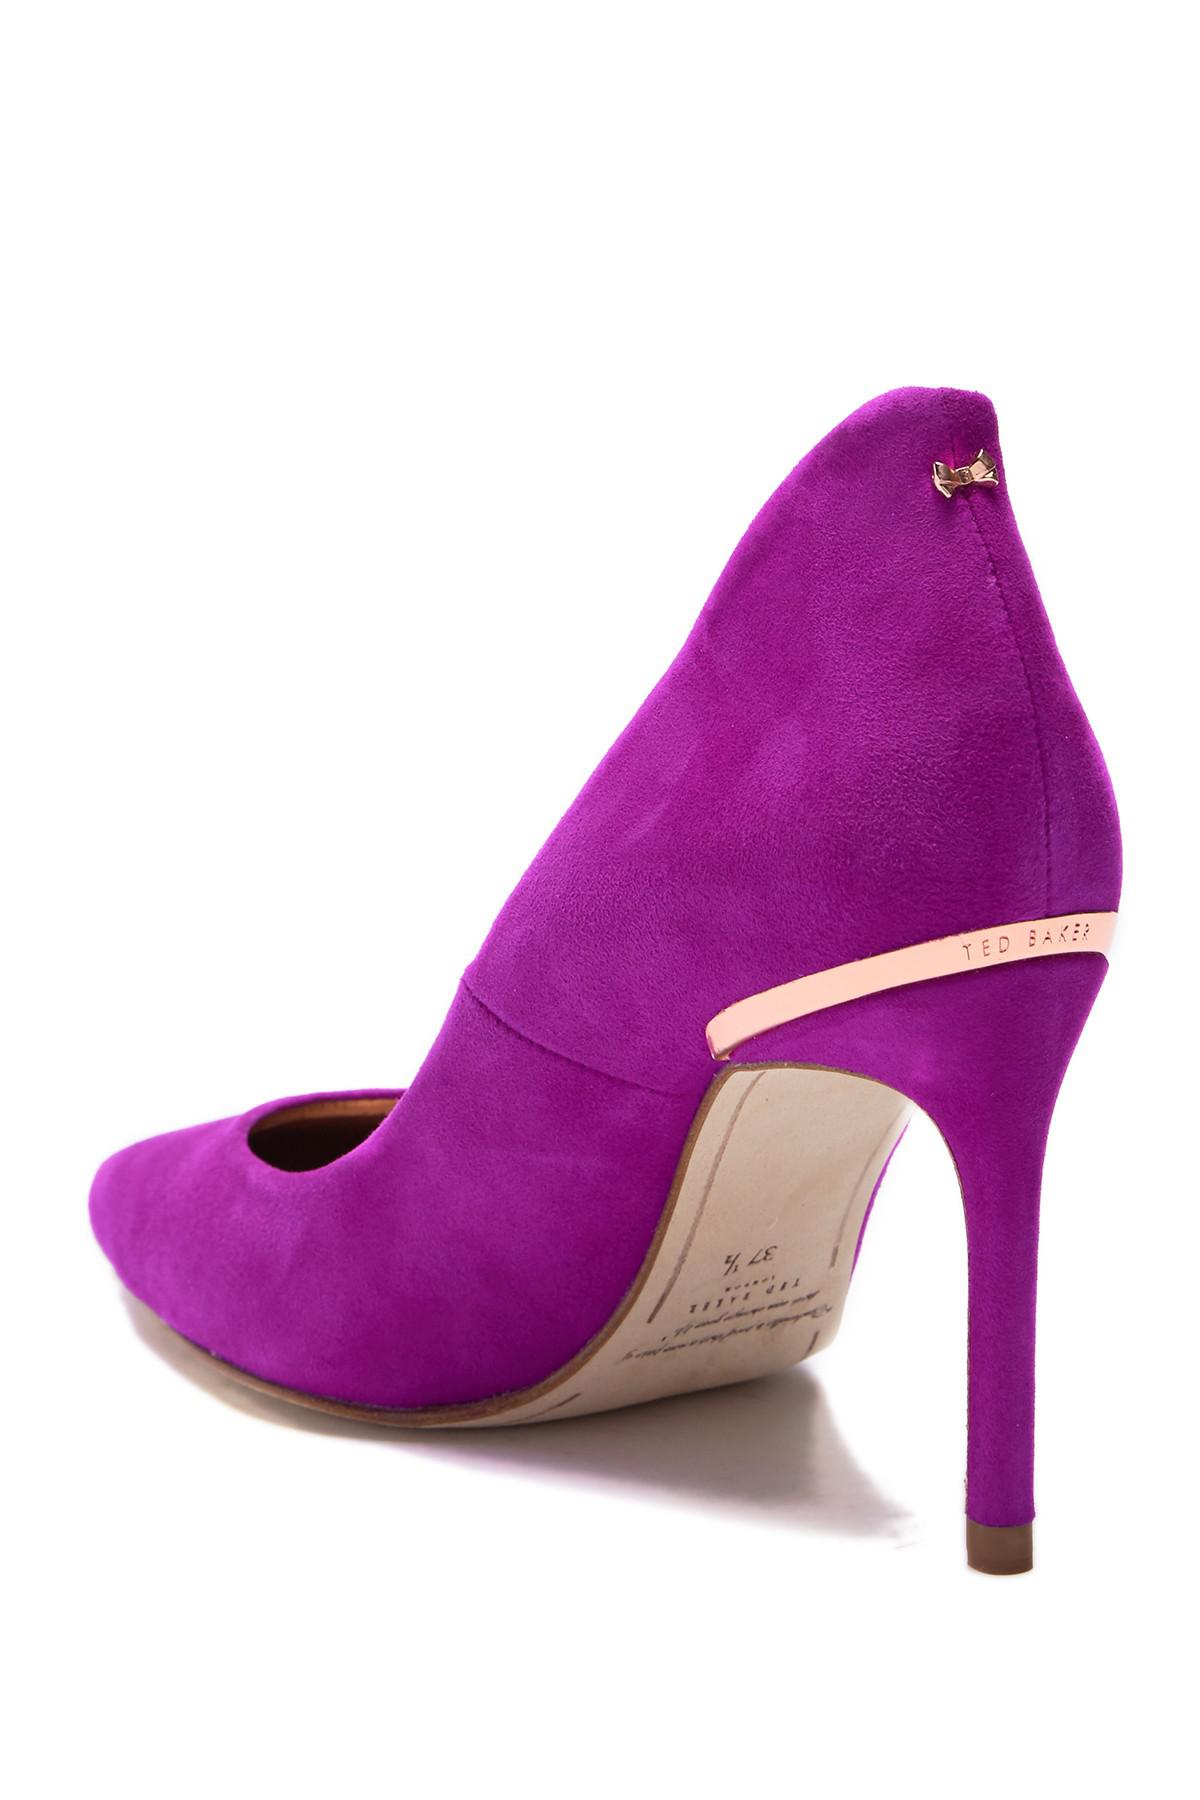 Ted Baker Suede Savio 2 Stiletto Heeled Court Shoes in Fuchsia (Purple) -  Lyst